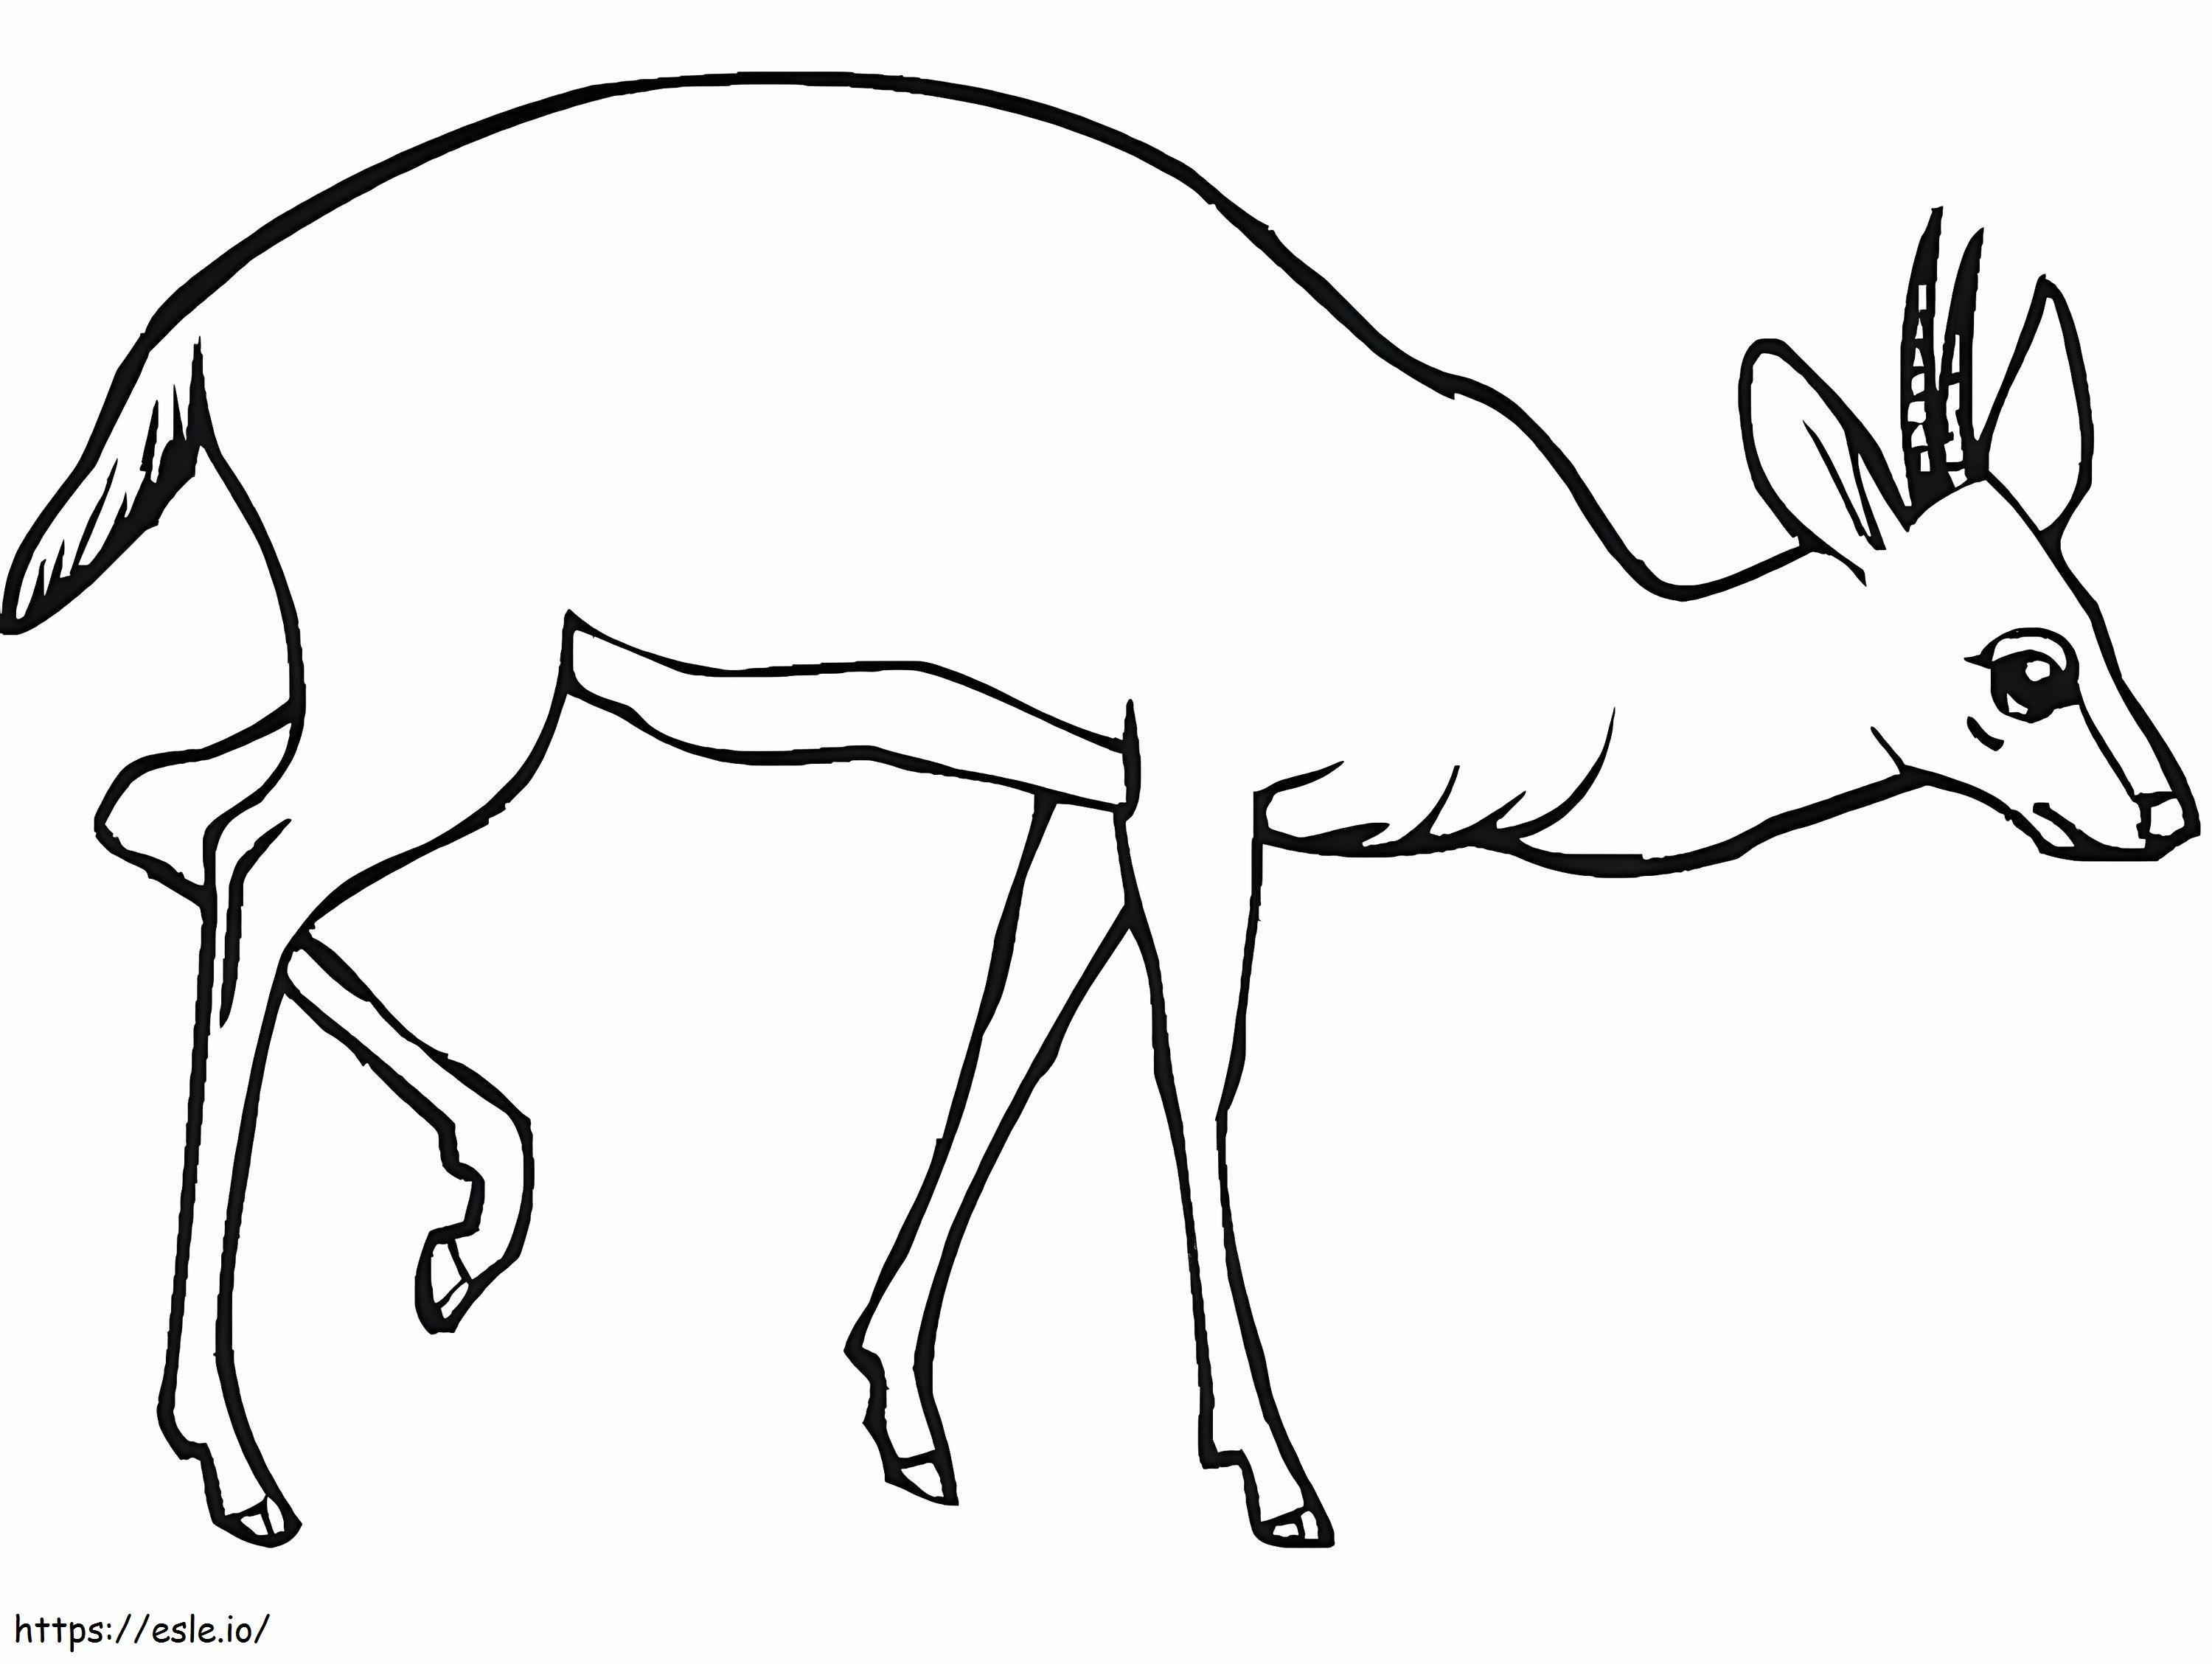 Printable Antelope coloring page